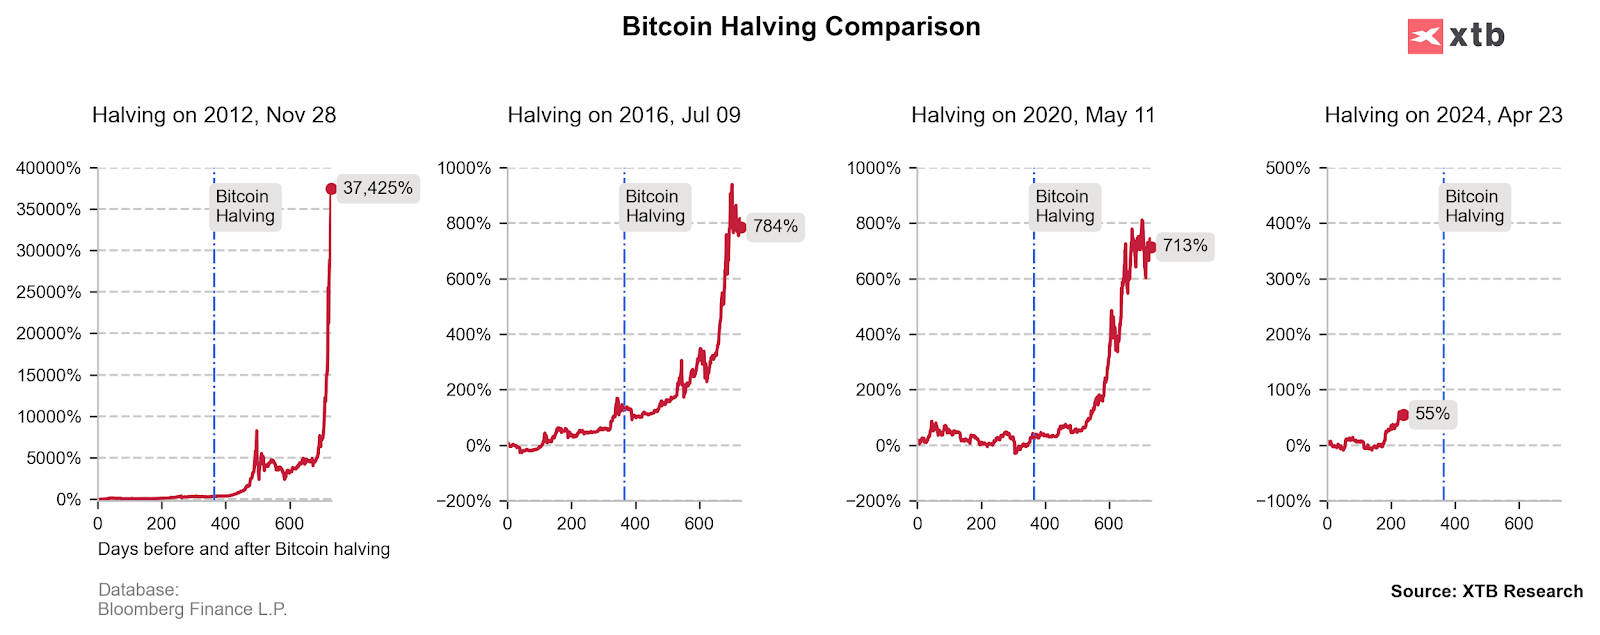 A graph of a bitcoin halving comparison

Description automatically generated